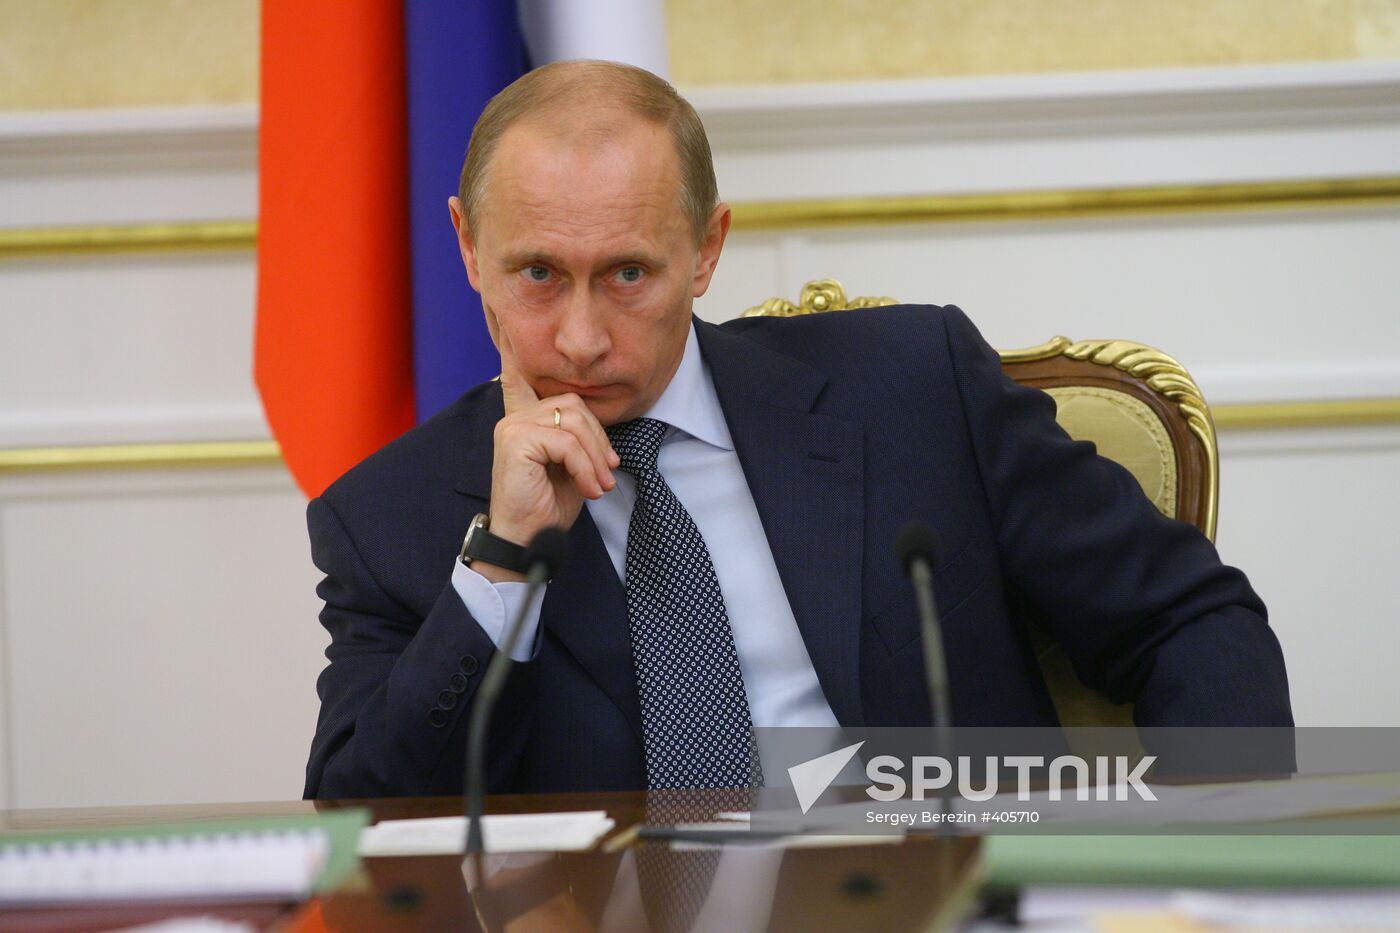 Vladimir Putin conducts meeting of government presidium